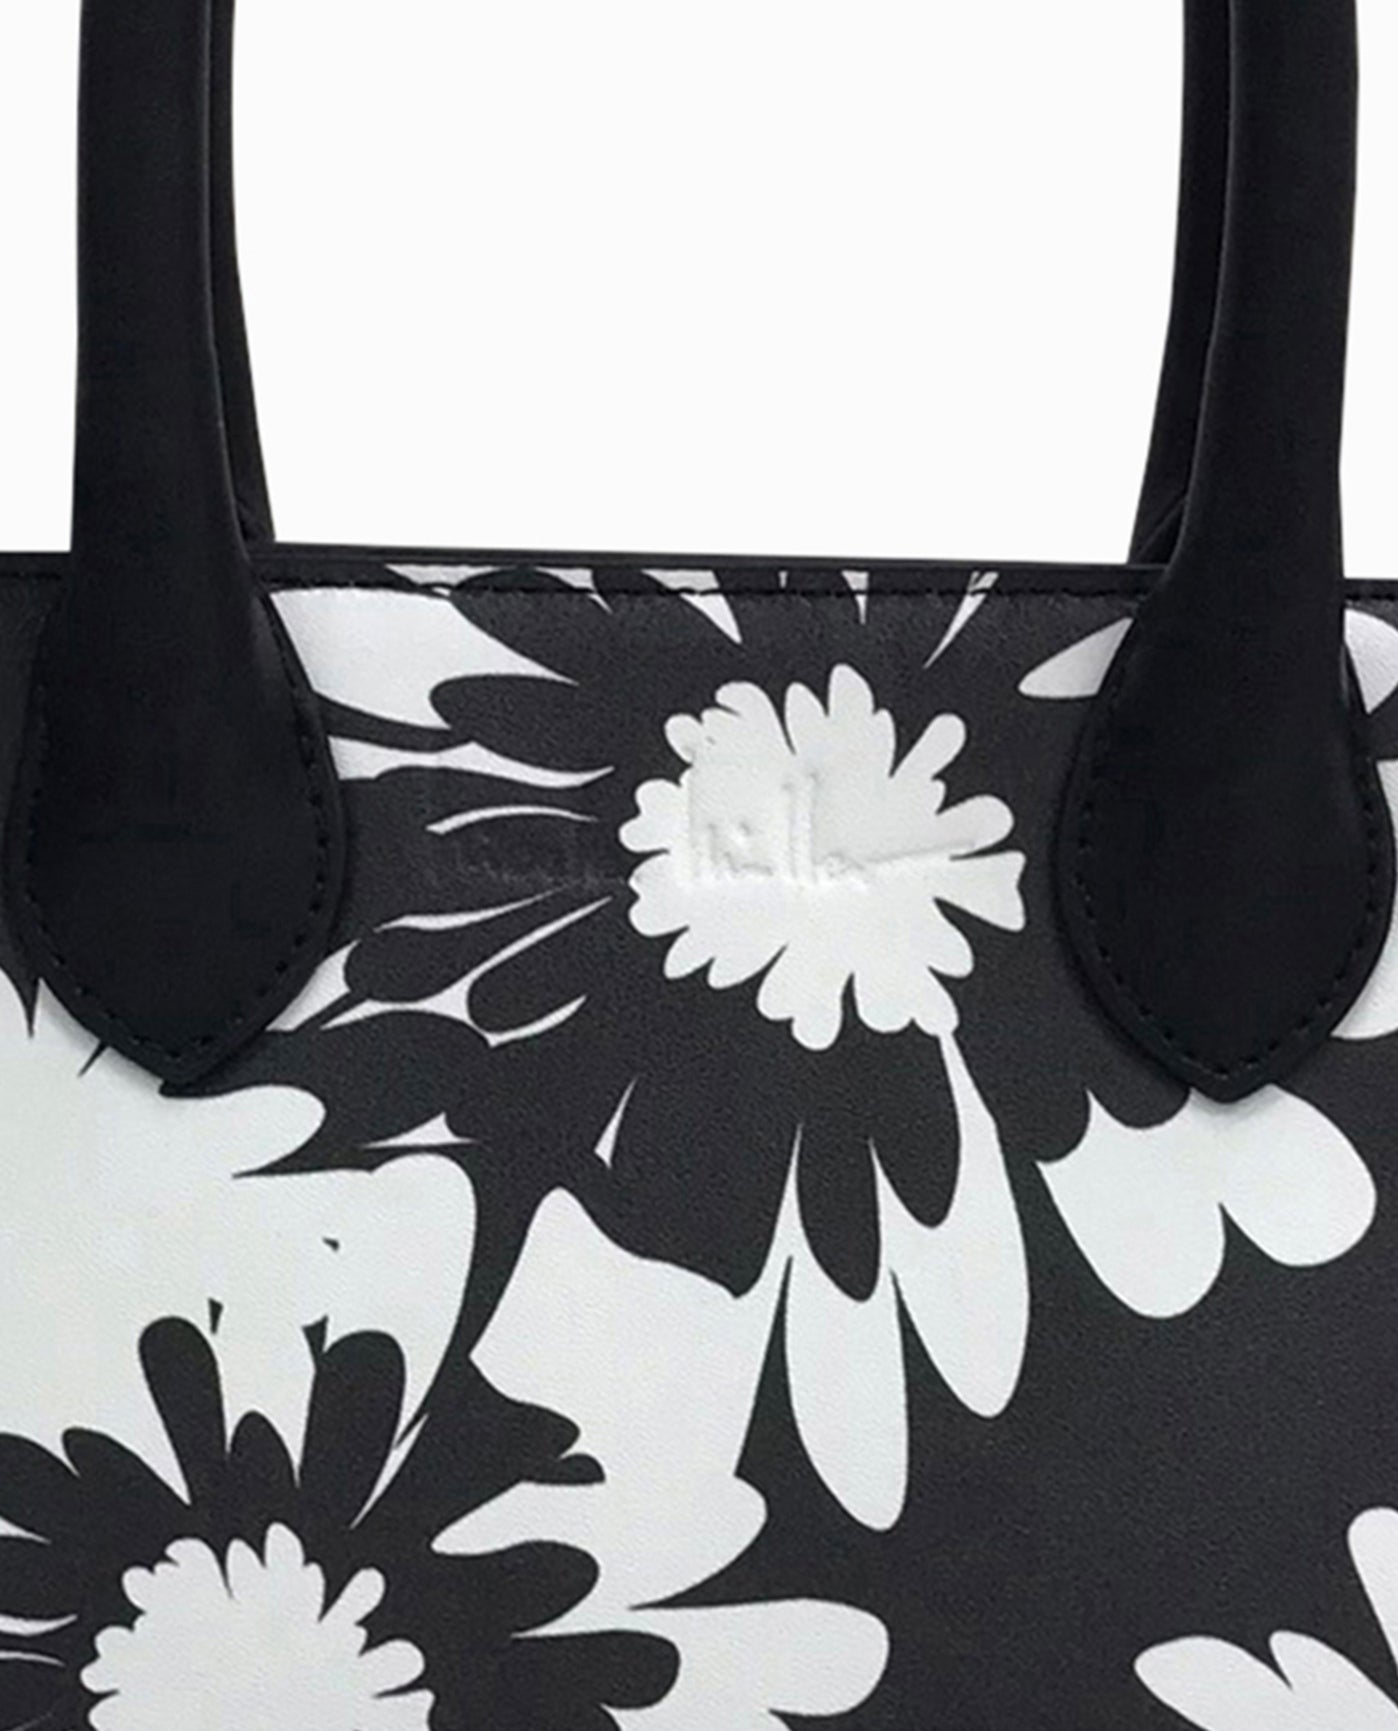 LOGO ON LEATHER NIKKI BAG | Black and White Floral